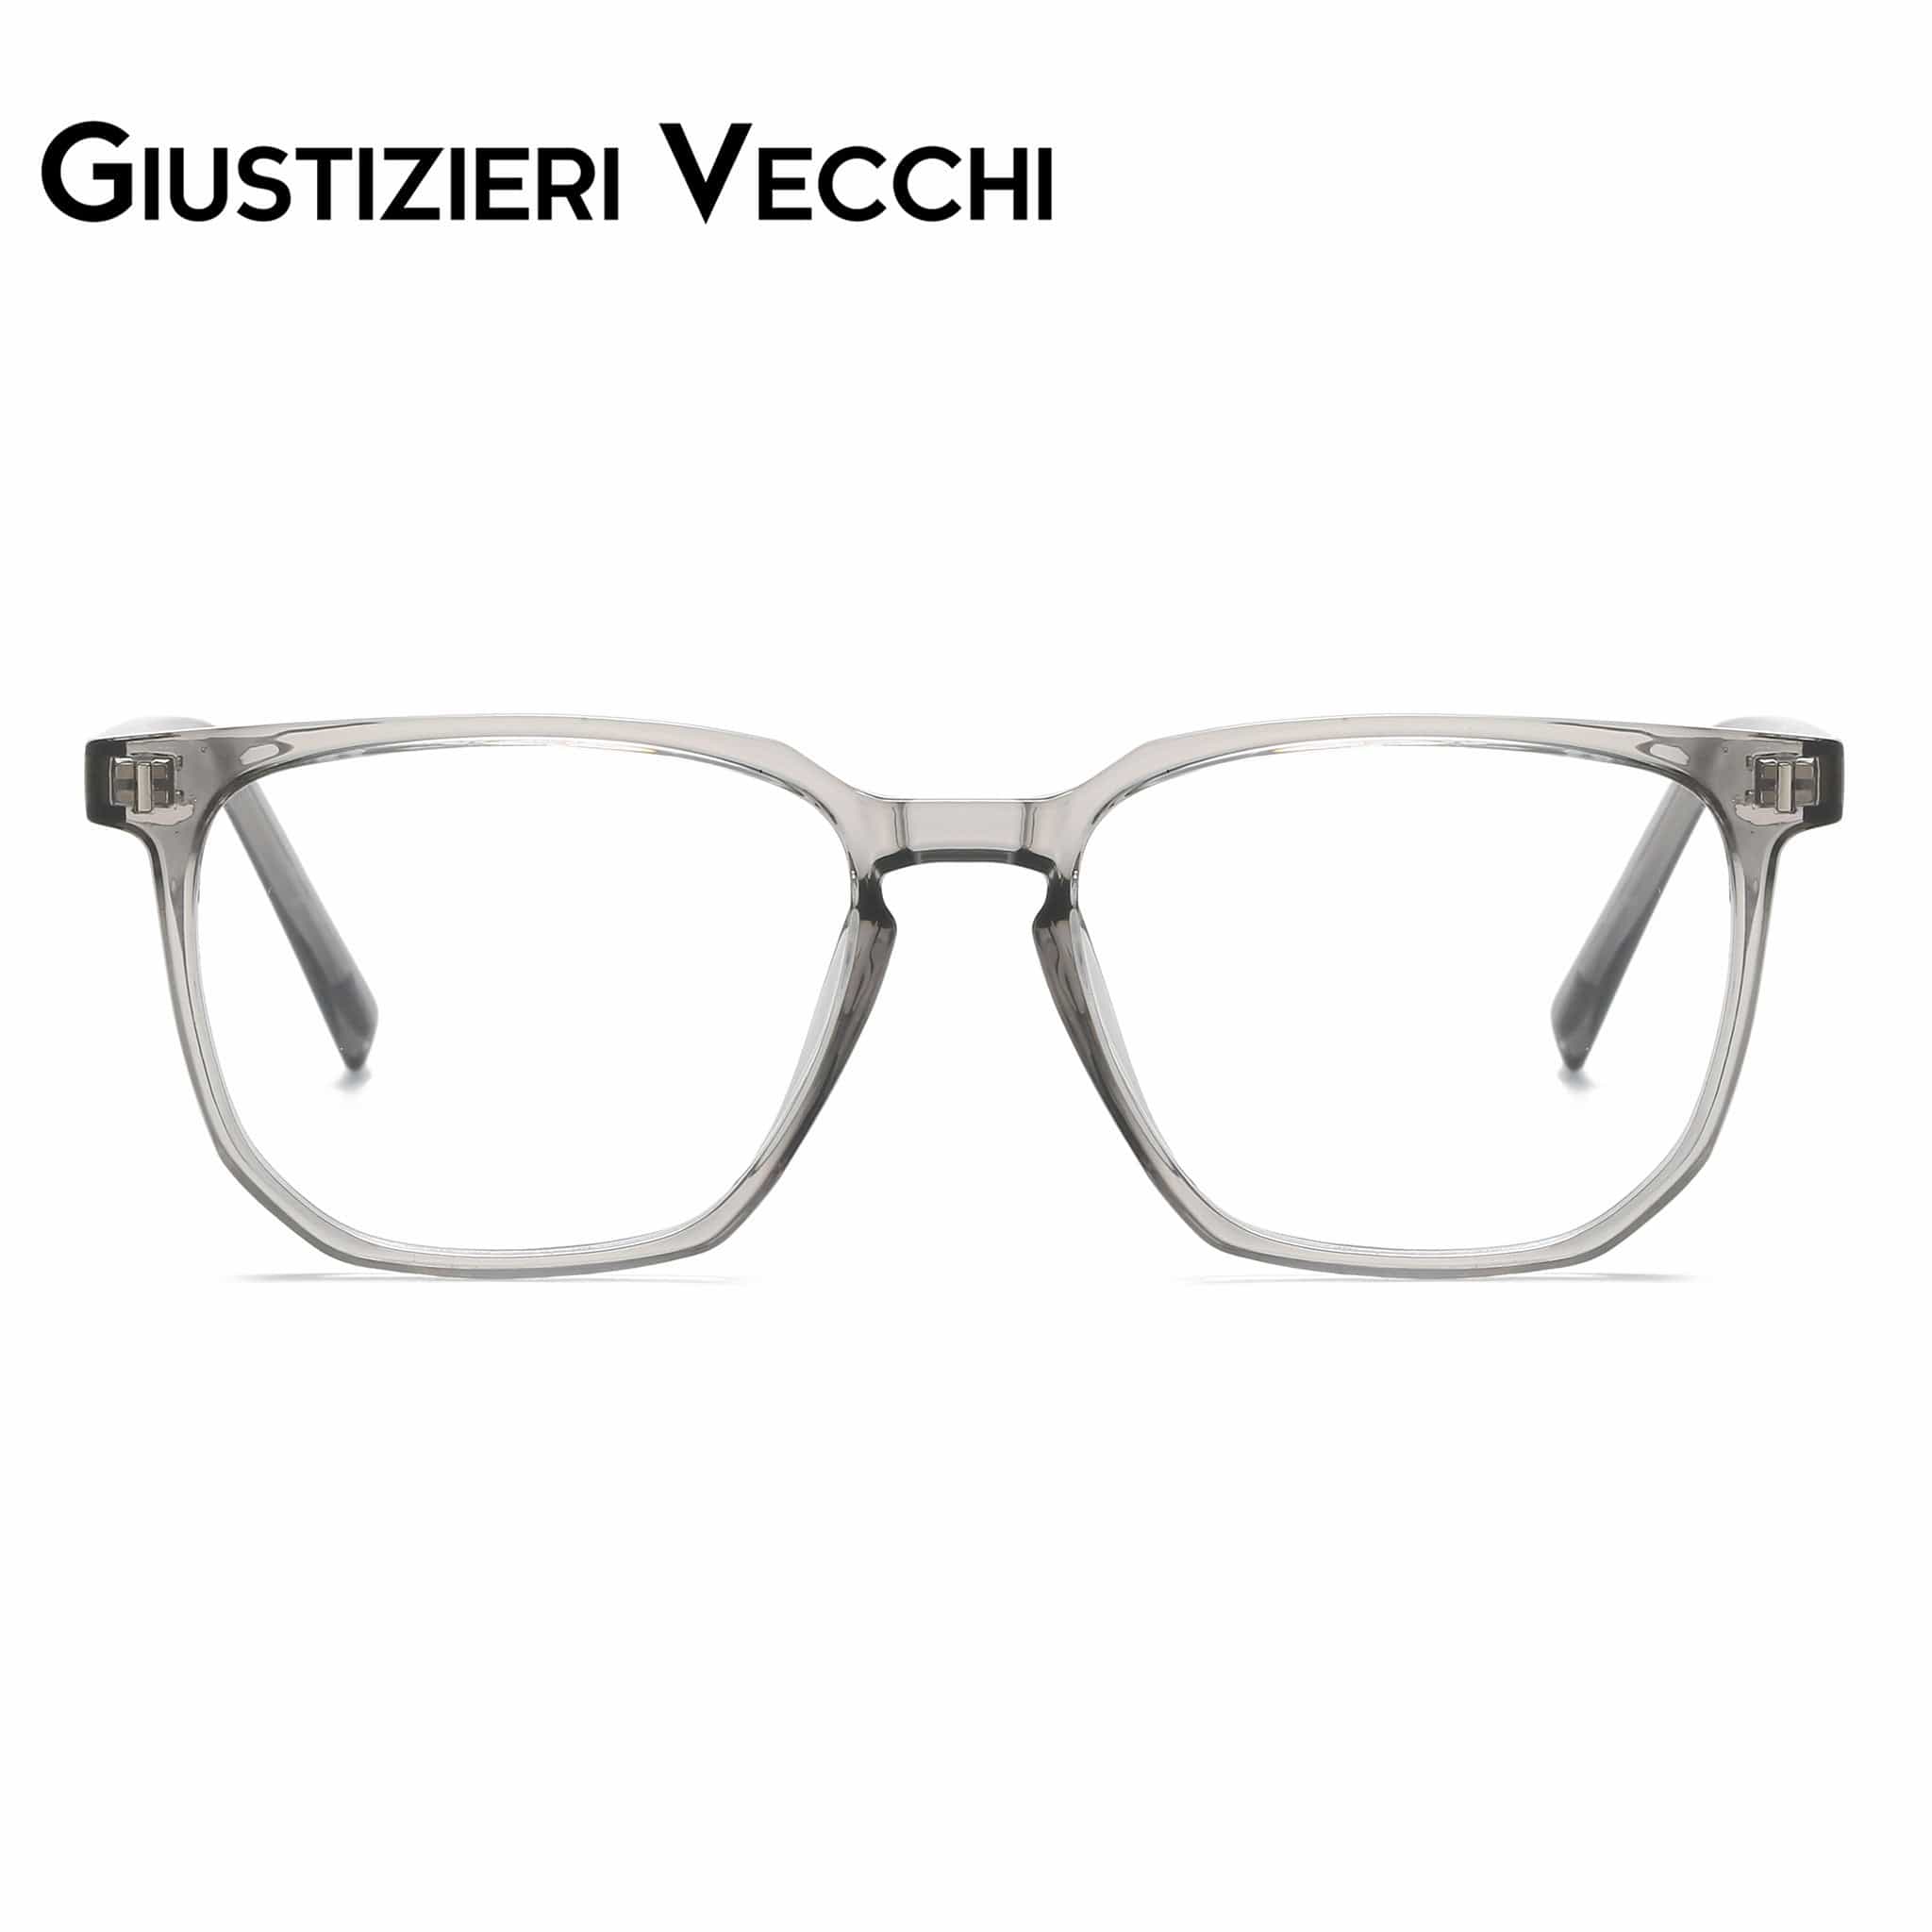 GIUSTIZIERI VECCHI Eyeglasses Medium / Sea Glass Grey CosmicSurf